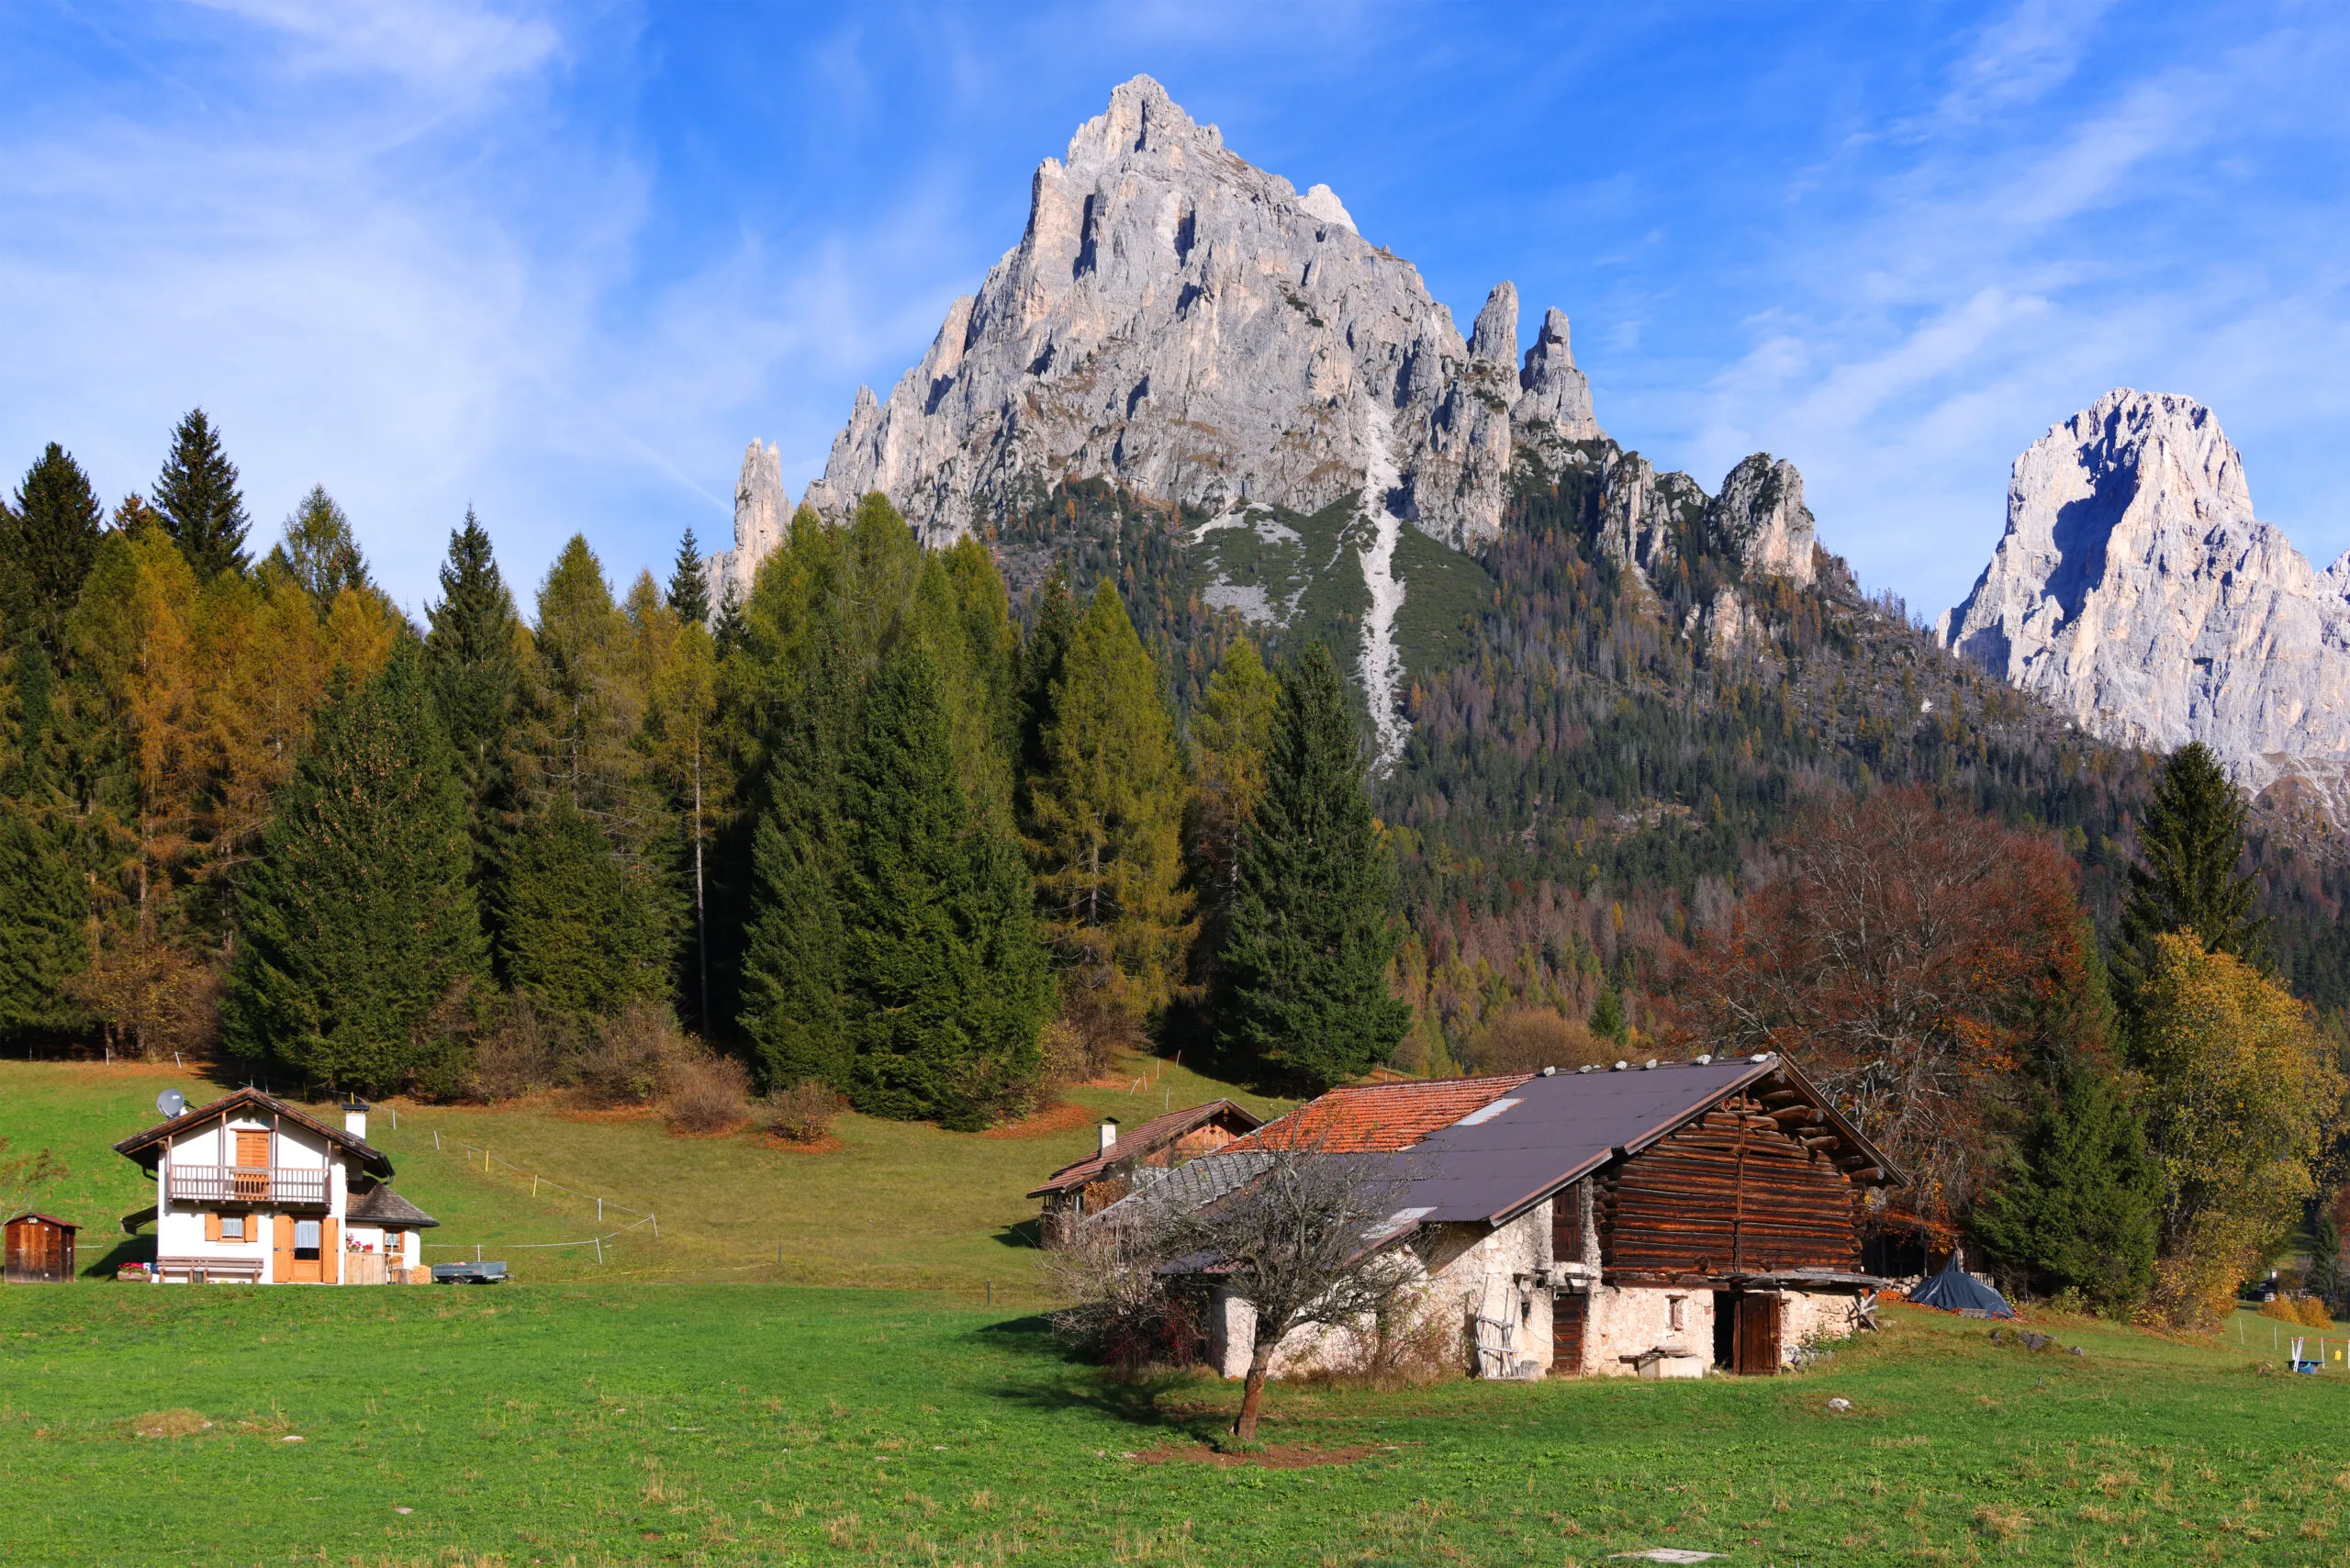 Colores otoñales en Val Pradidali, Pale di San Martino, Dolomitas, Italia